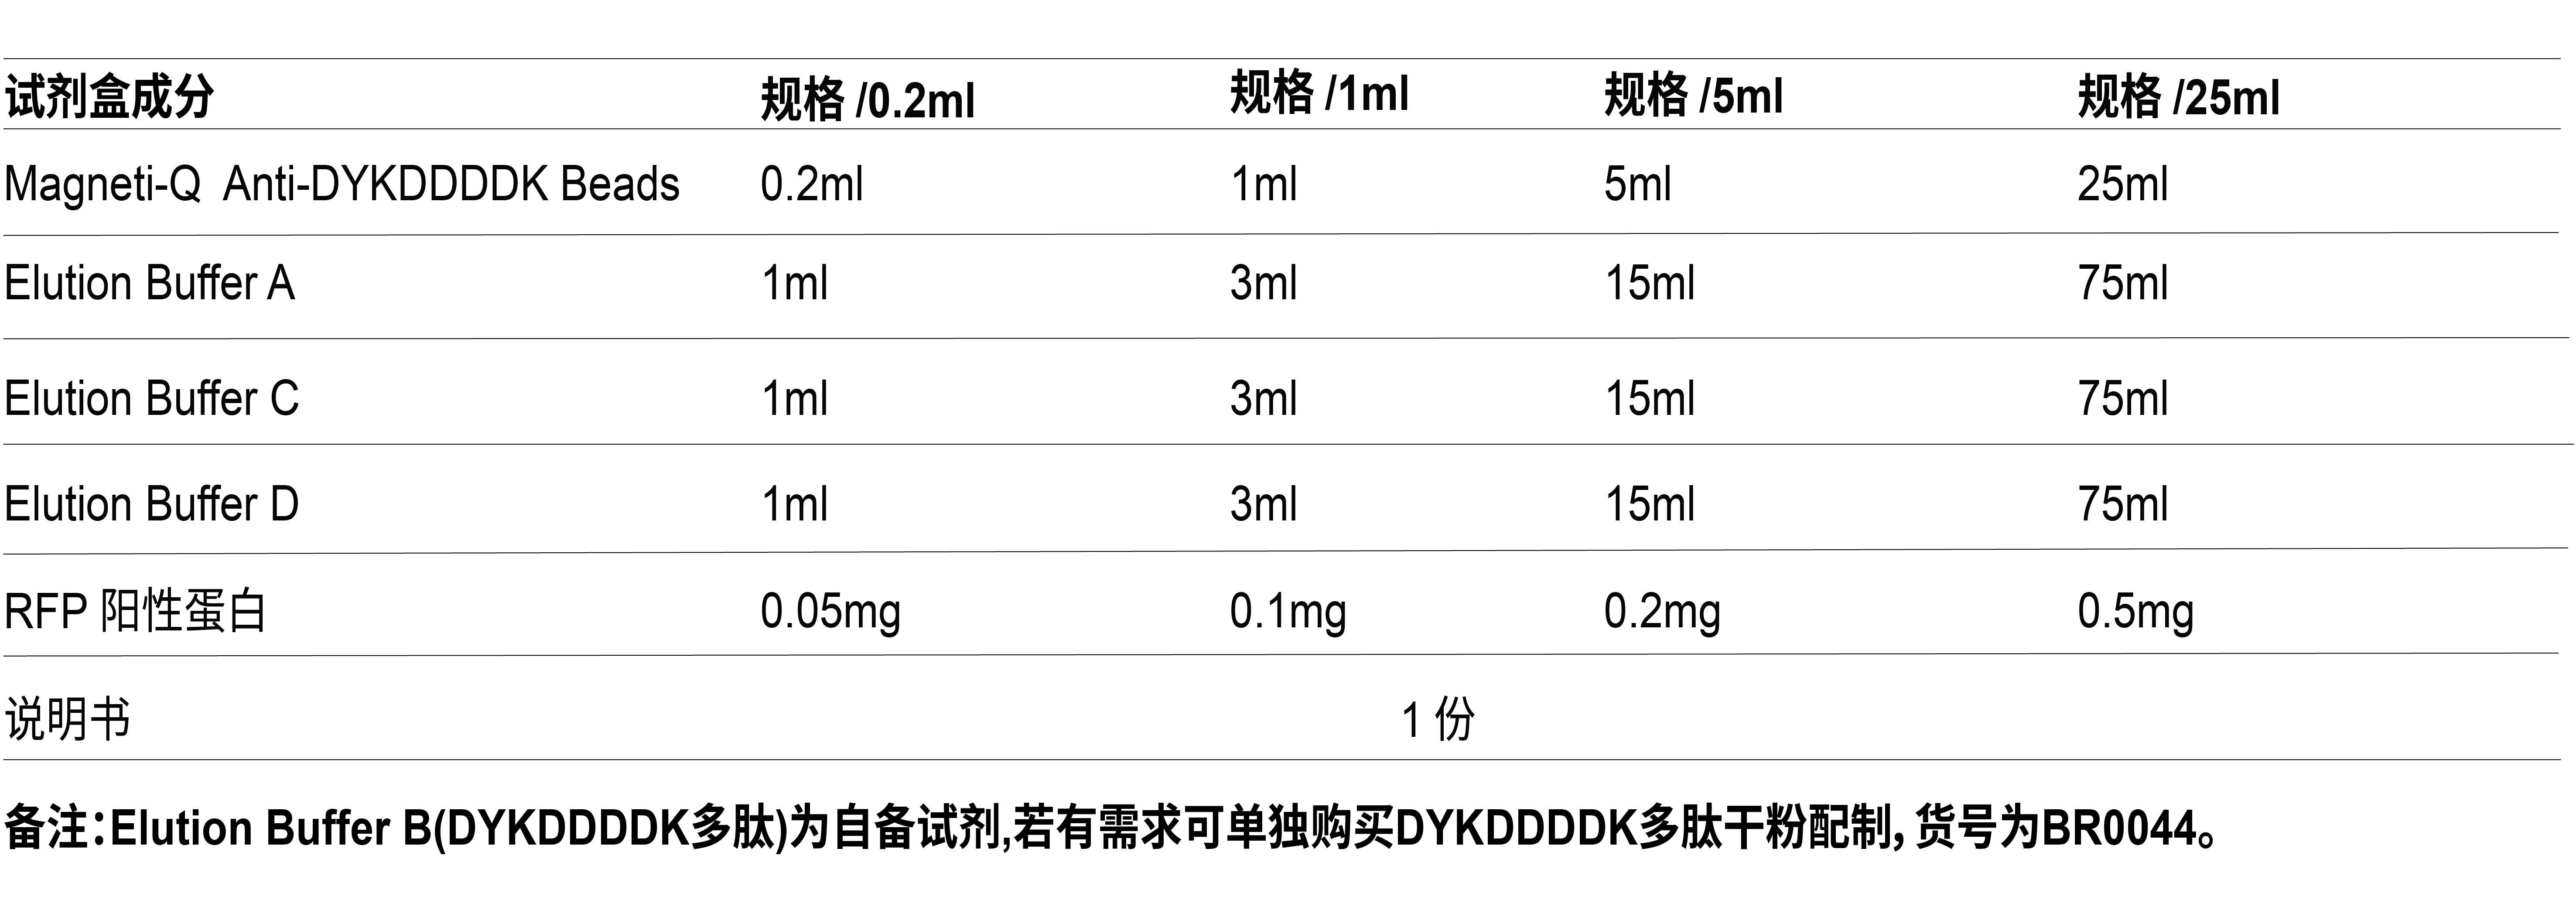 Magneti-Q DYKDDDDK标签蛋白纯化试剂盒插图